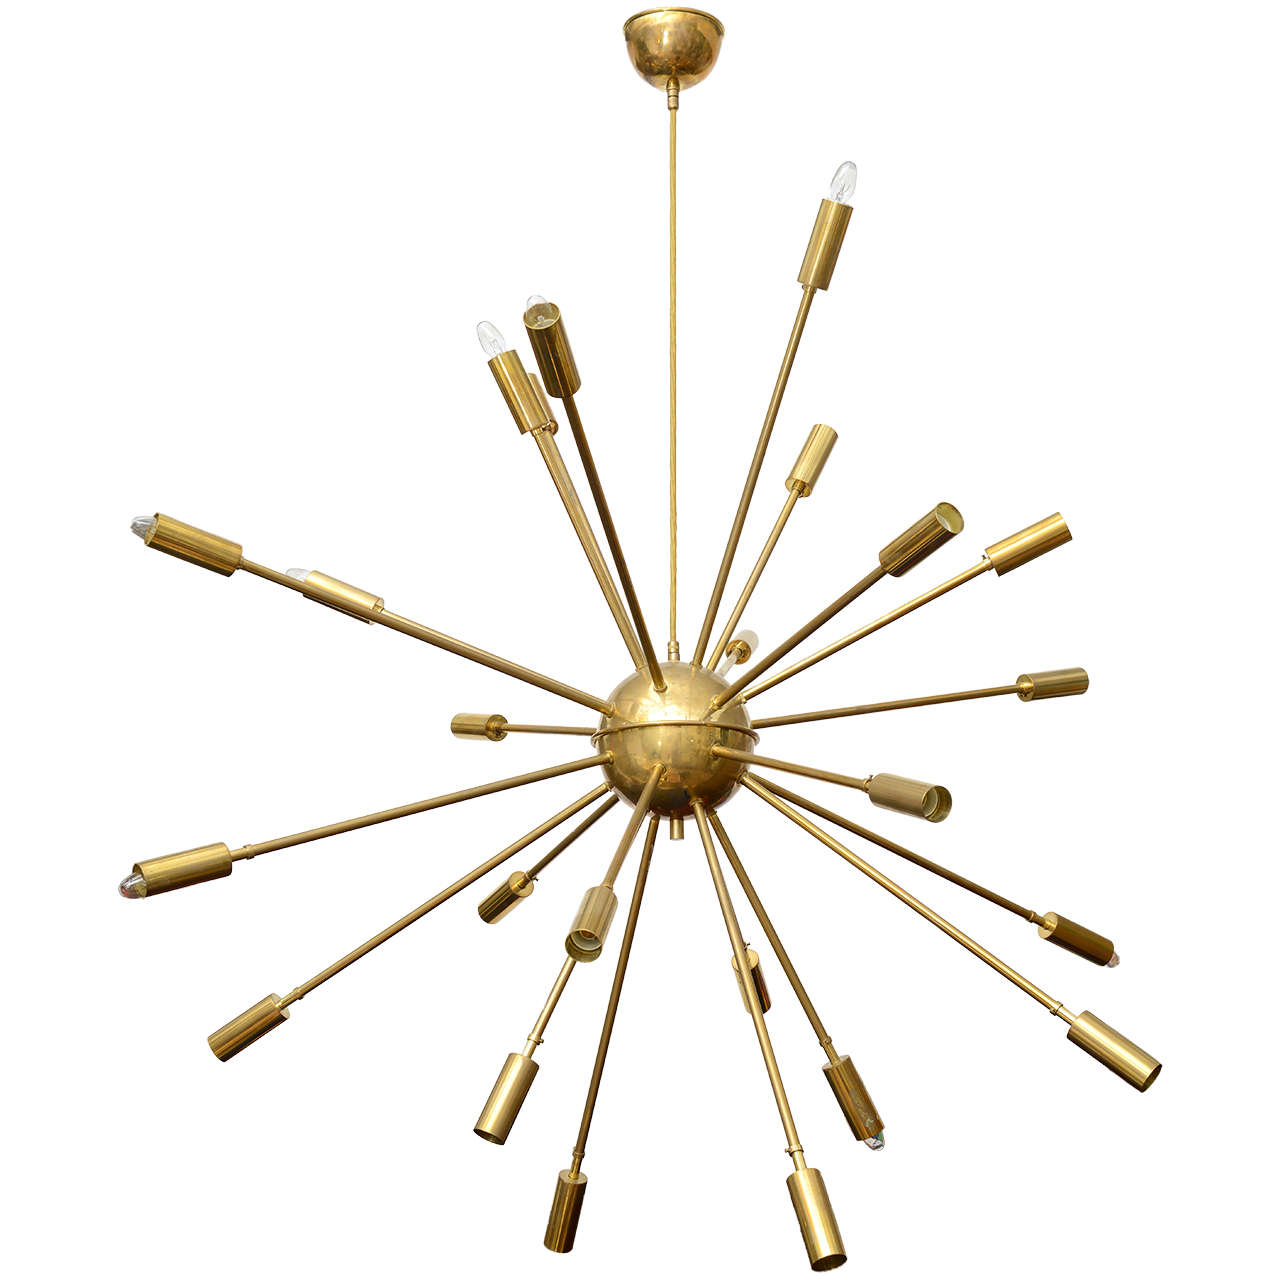 Italian Mid-Century Modern 24-Arm Original Brass Sputnik Chandelier by Stilnovo For Sale